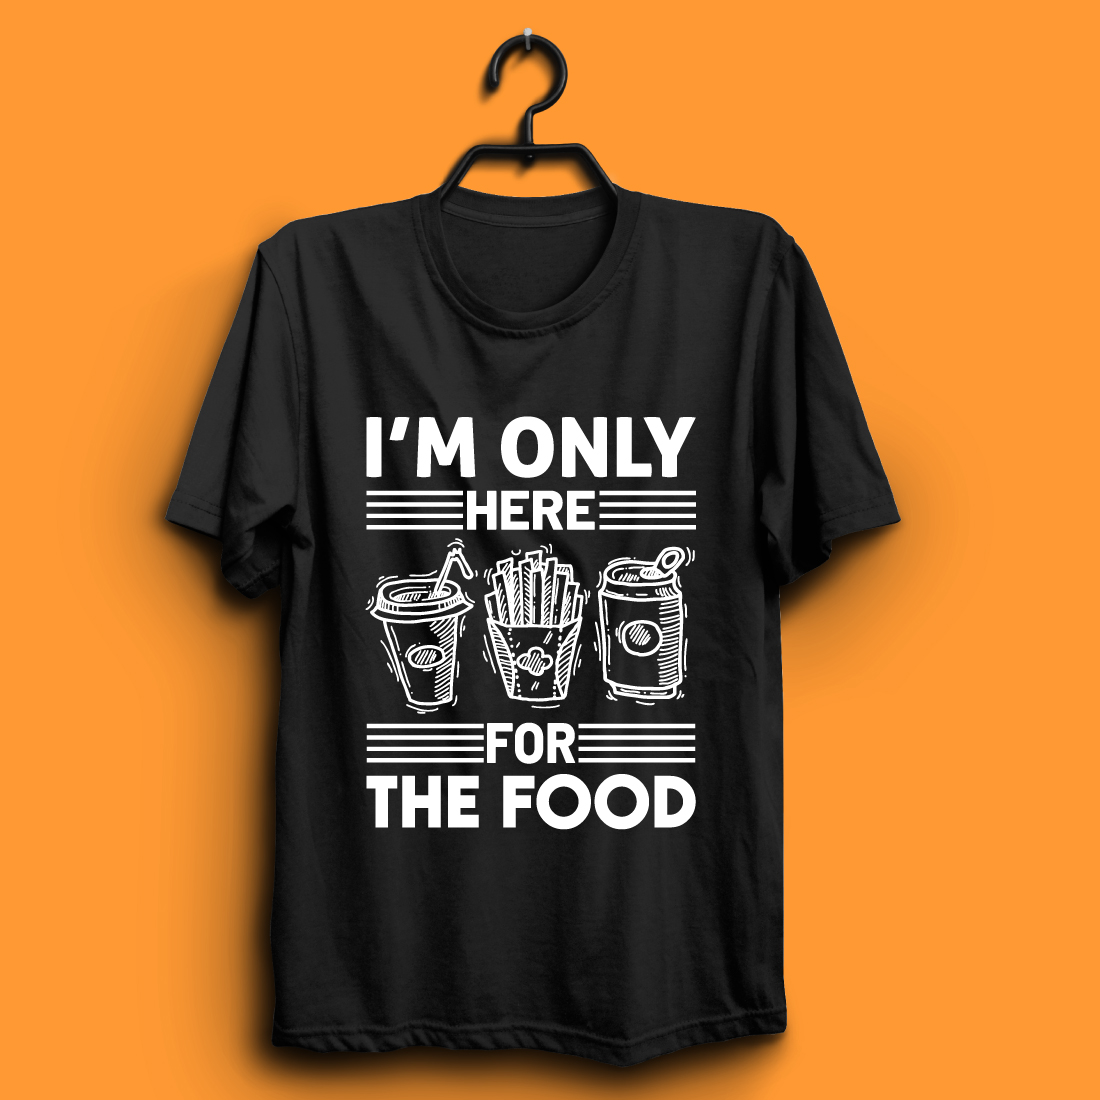 food t shirt design04 679